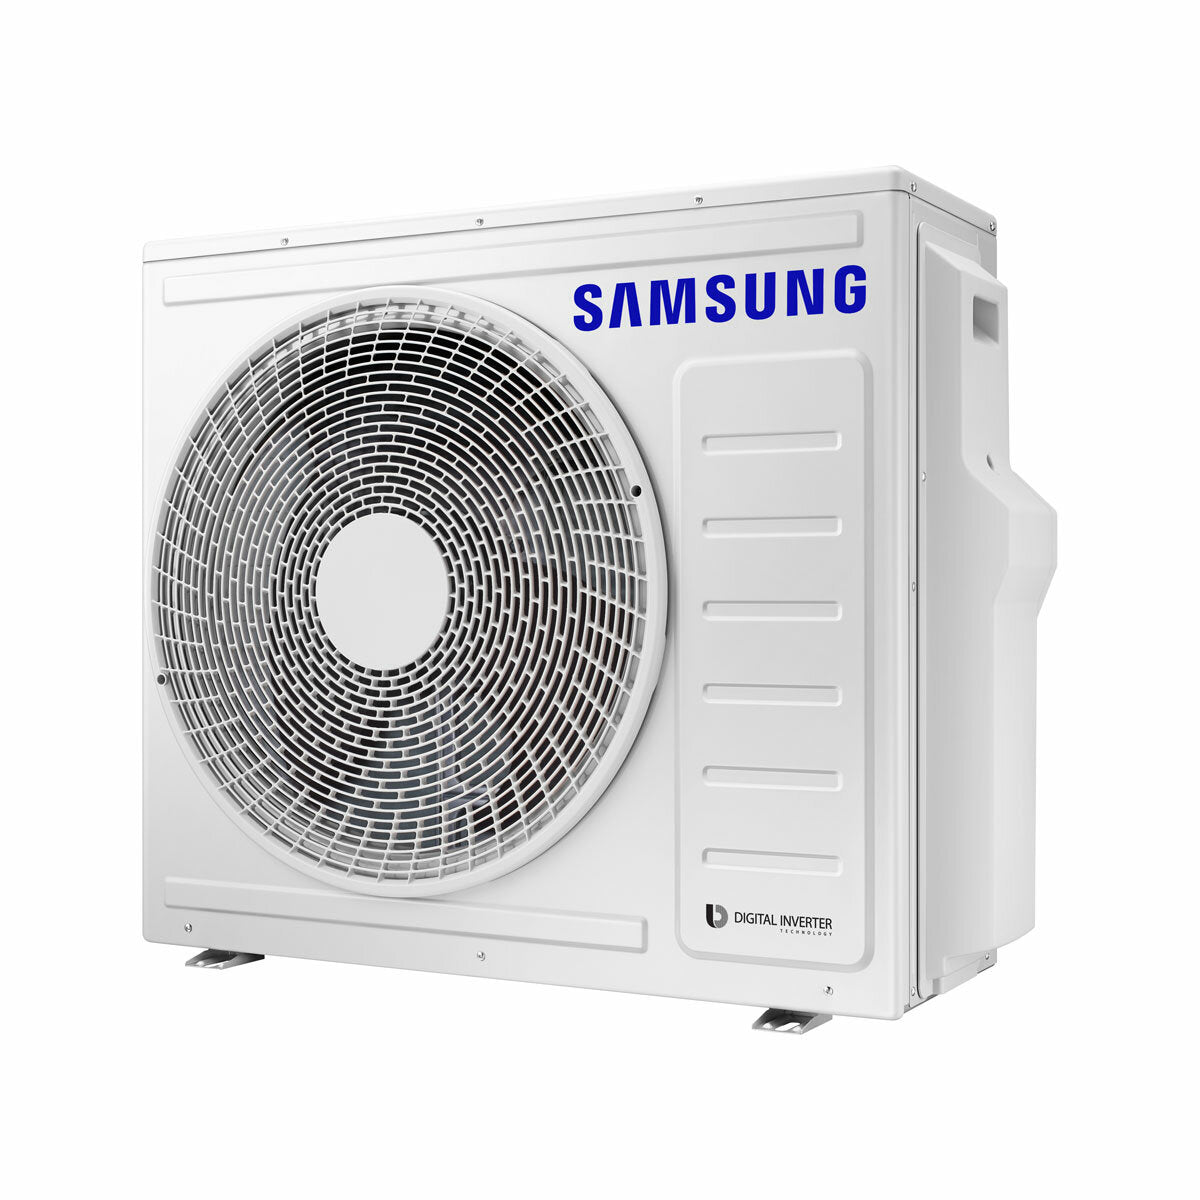 Samsung Air conditioner Windfree 4-way square split 7000 + 9000 + 9000 + 9000 BTU inverter A ++ outdoor unit 8.0 kW